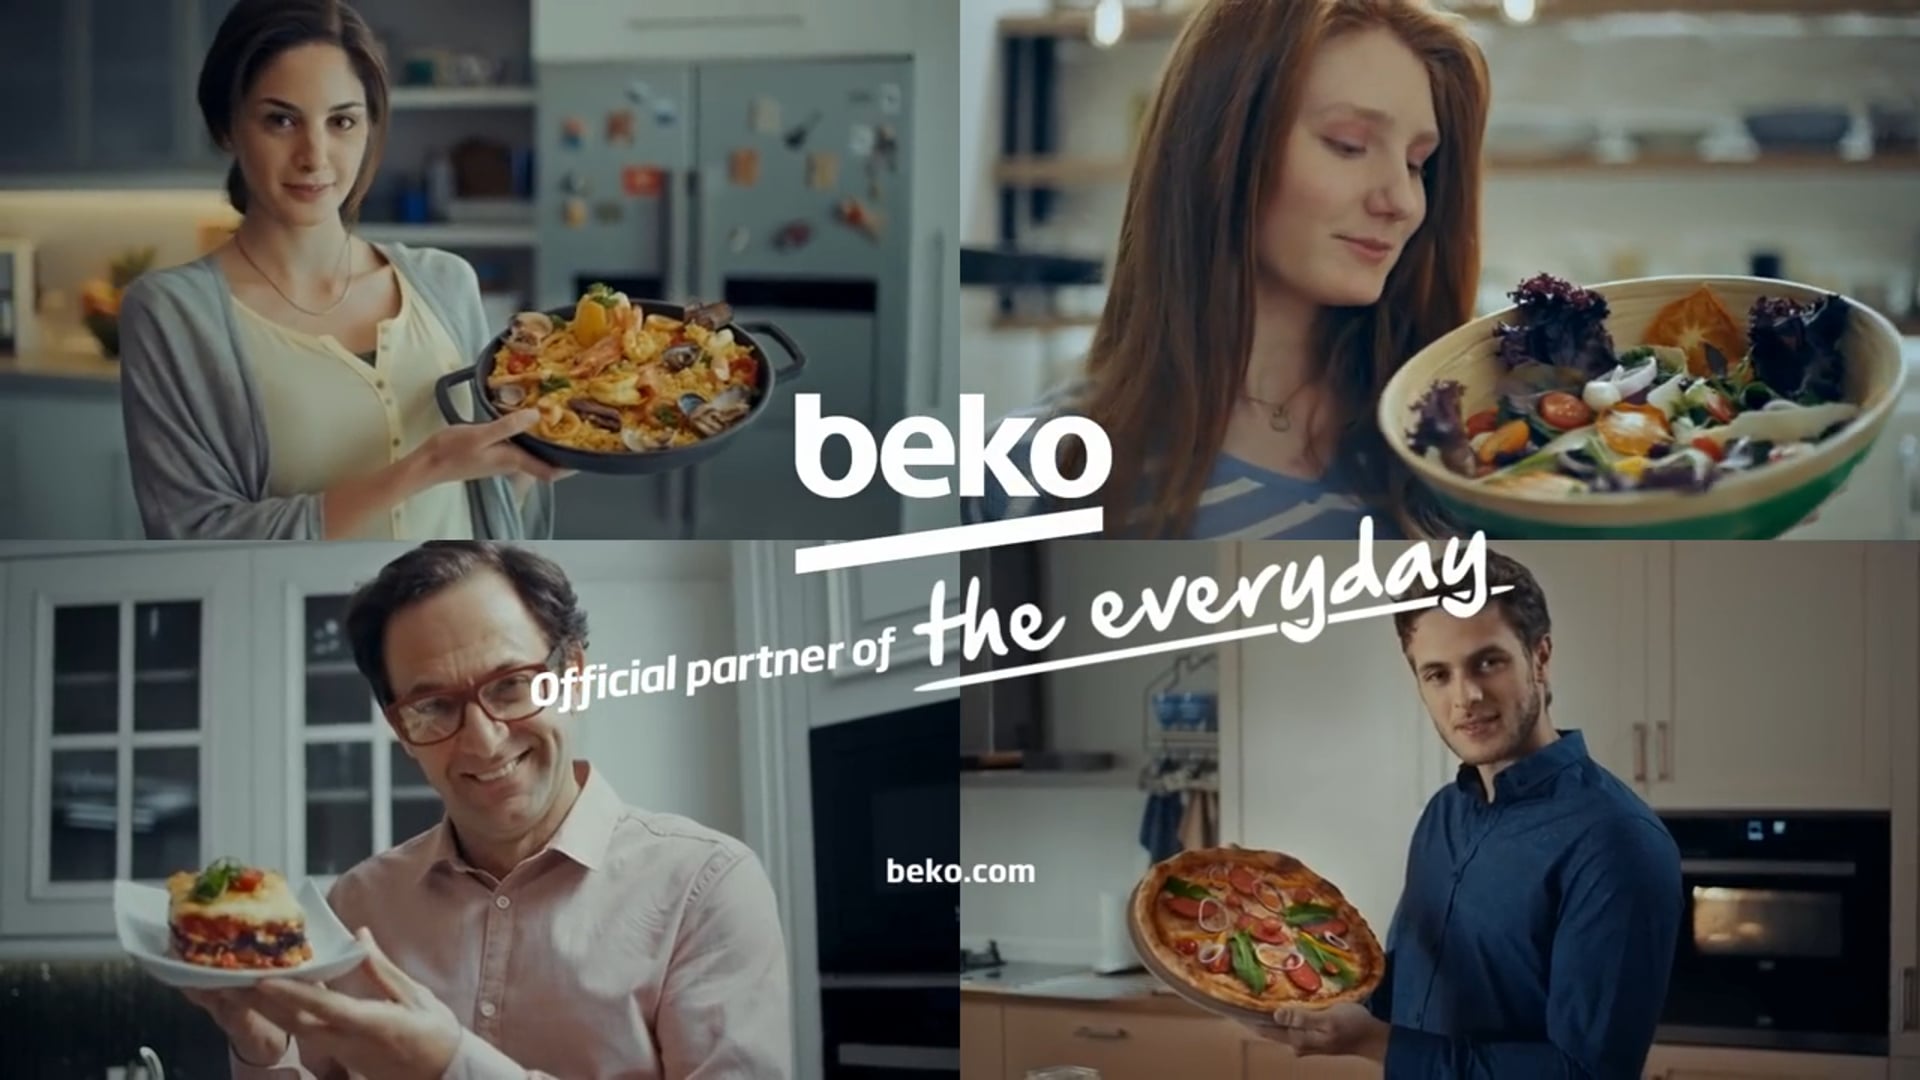 Melis Sadikoglu Icbilen/Foodstylist -Beko Official Partner of that perfect match